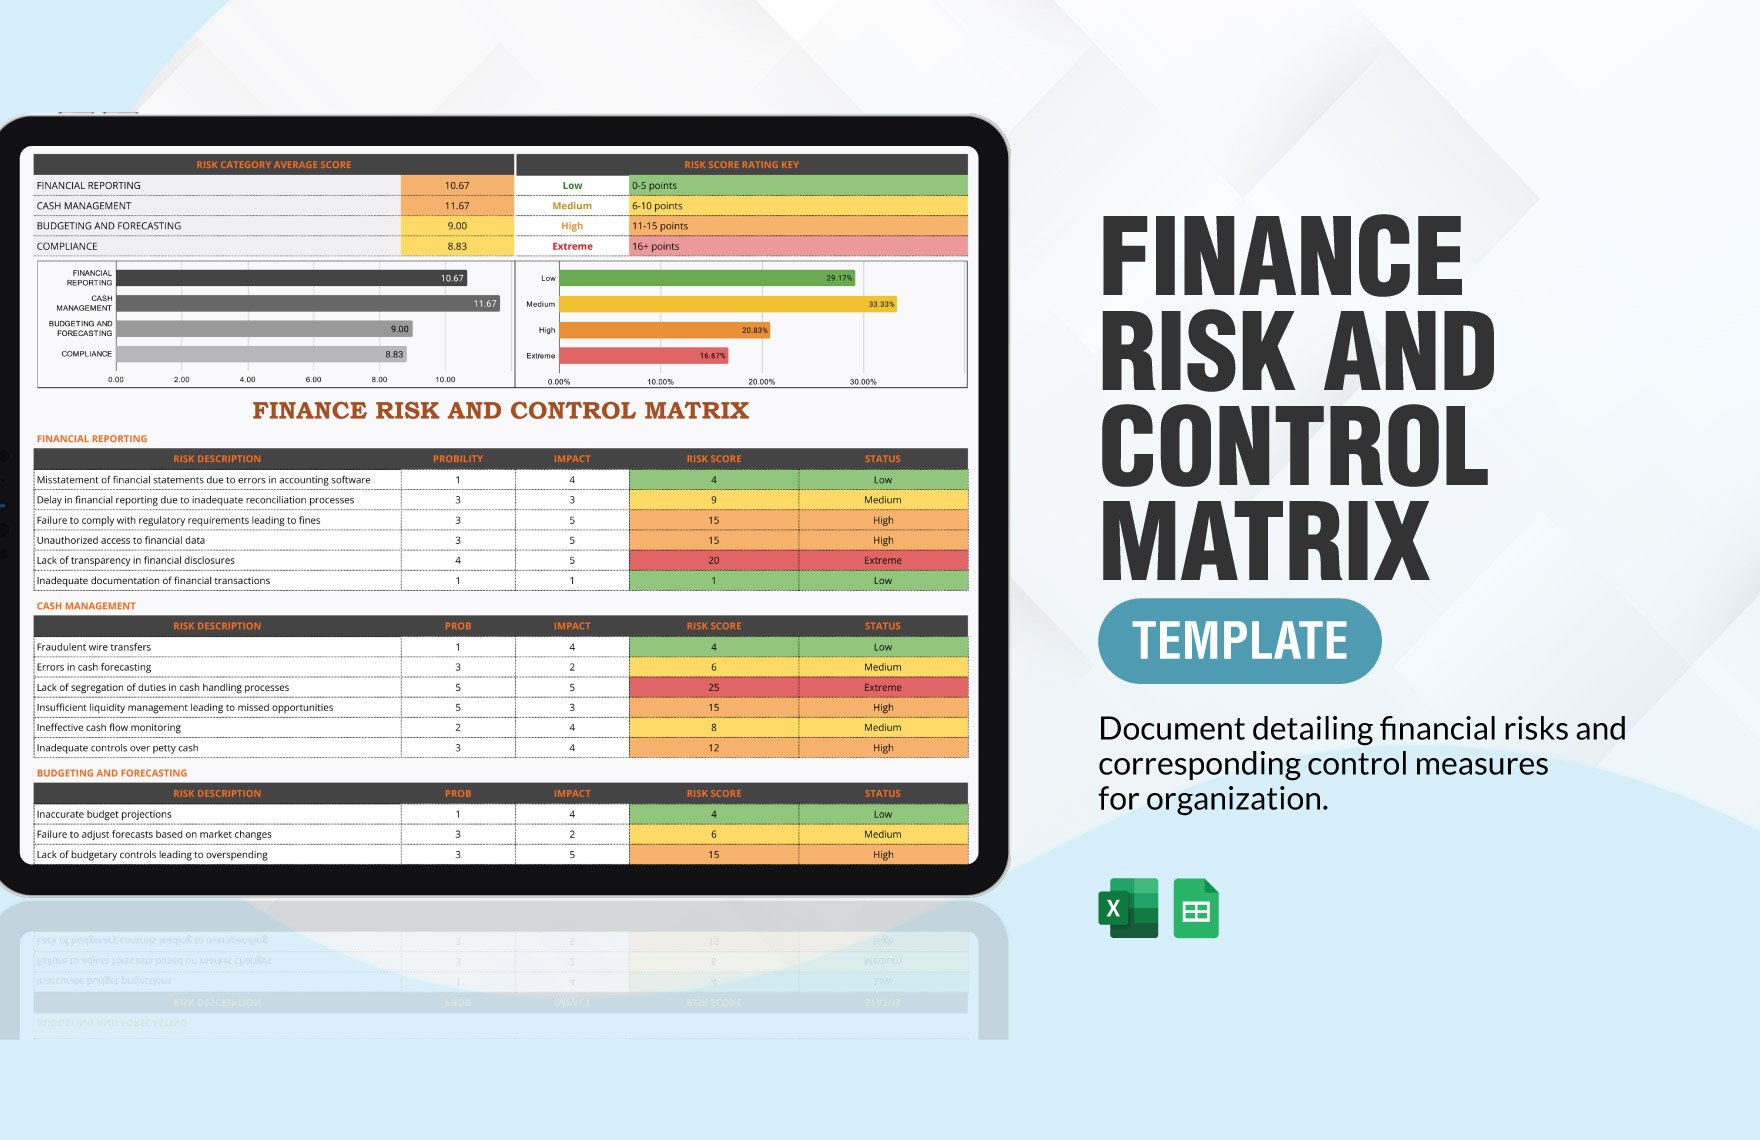 Finance Risk and Control Matrix Template